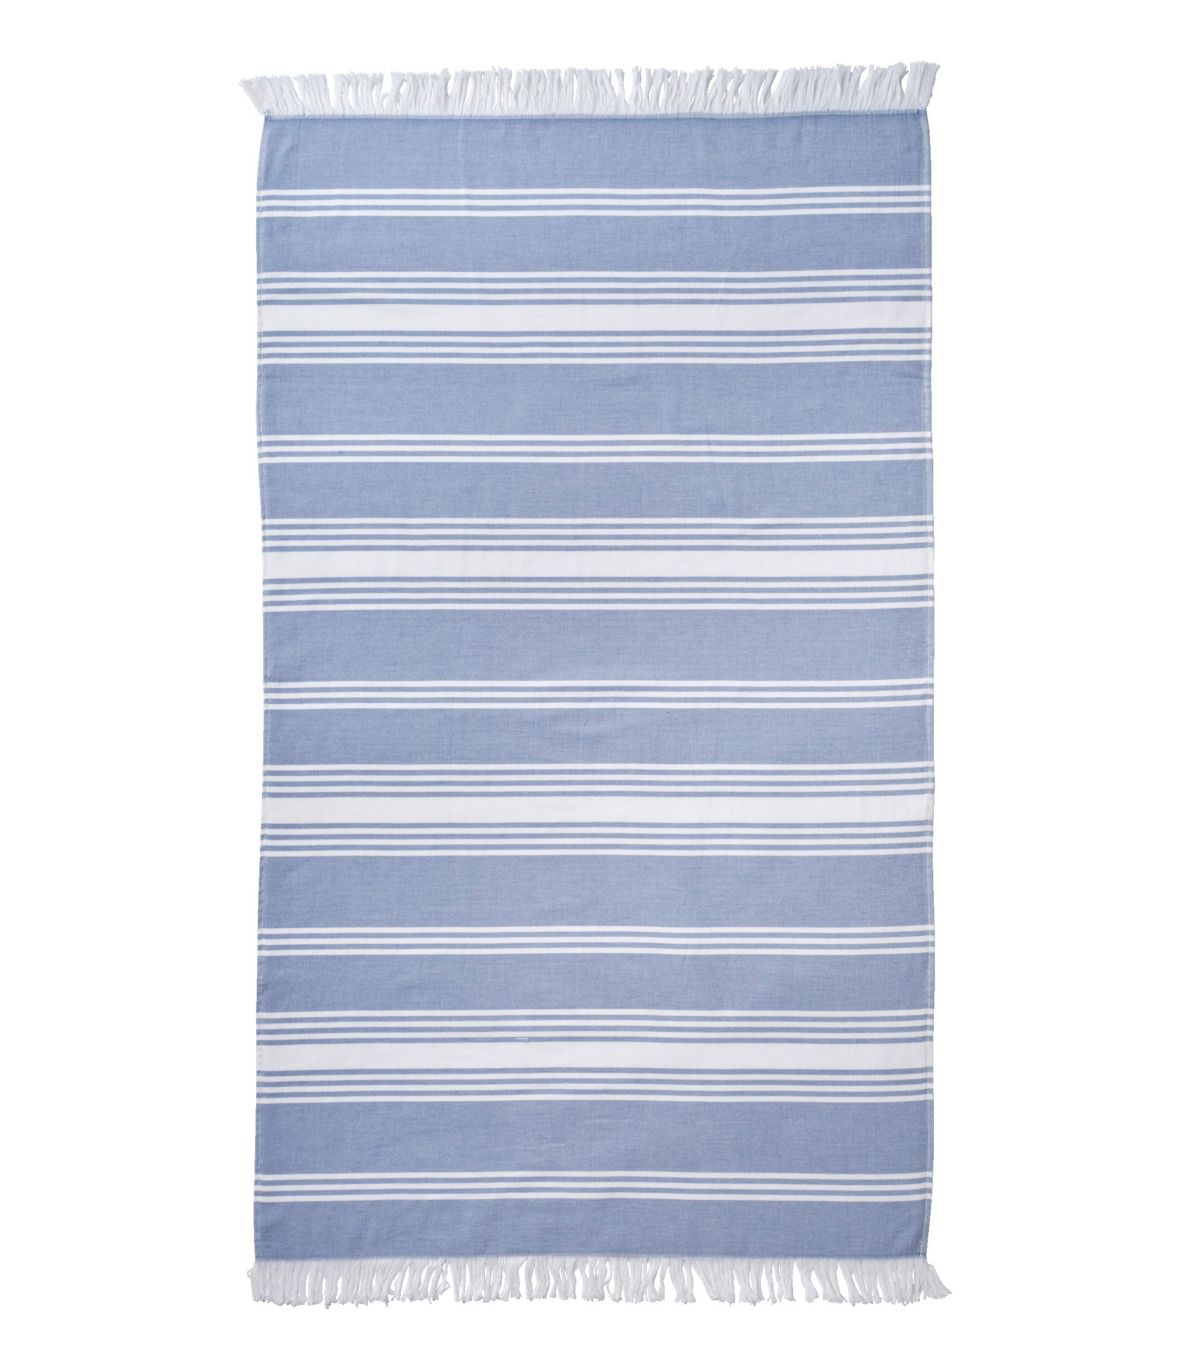 Turkish Beach Towel, Stripe